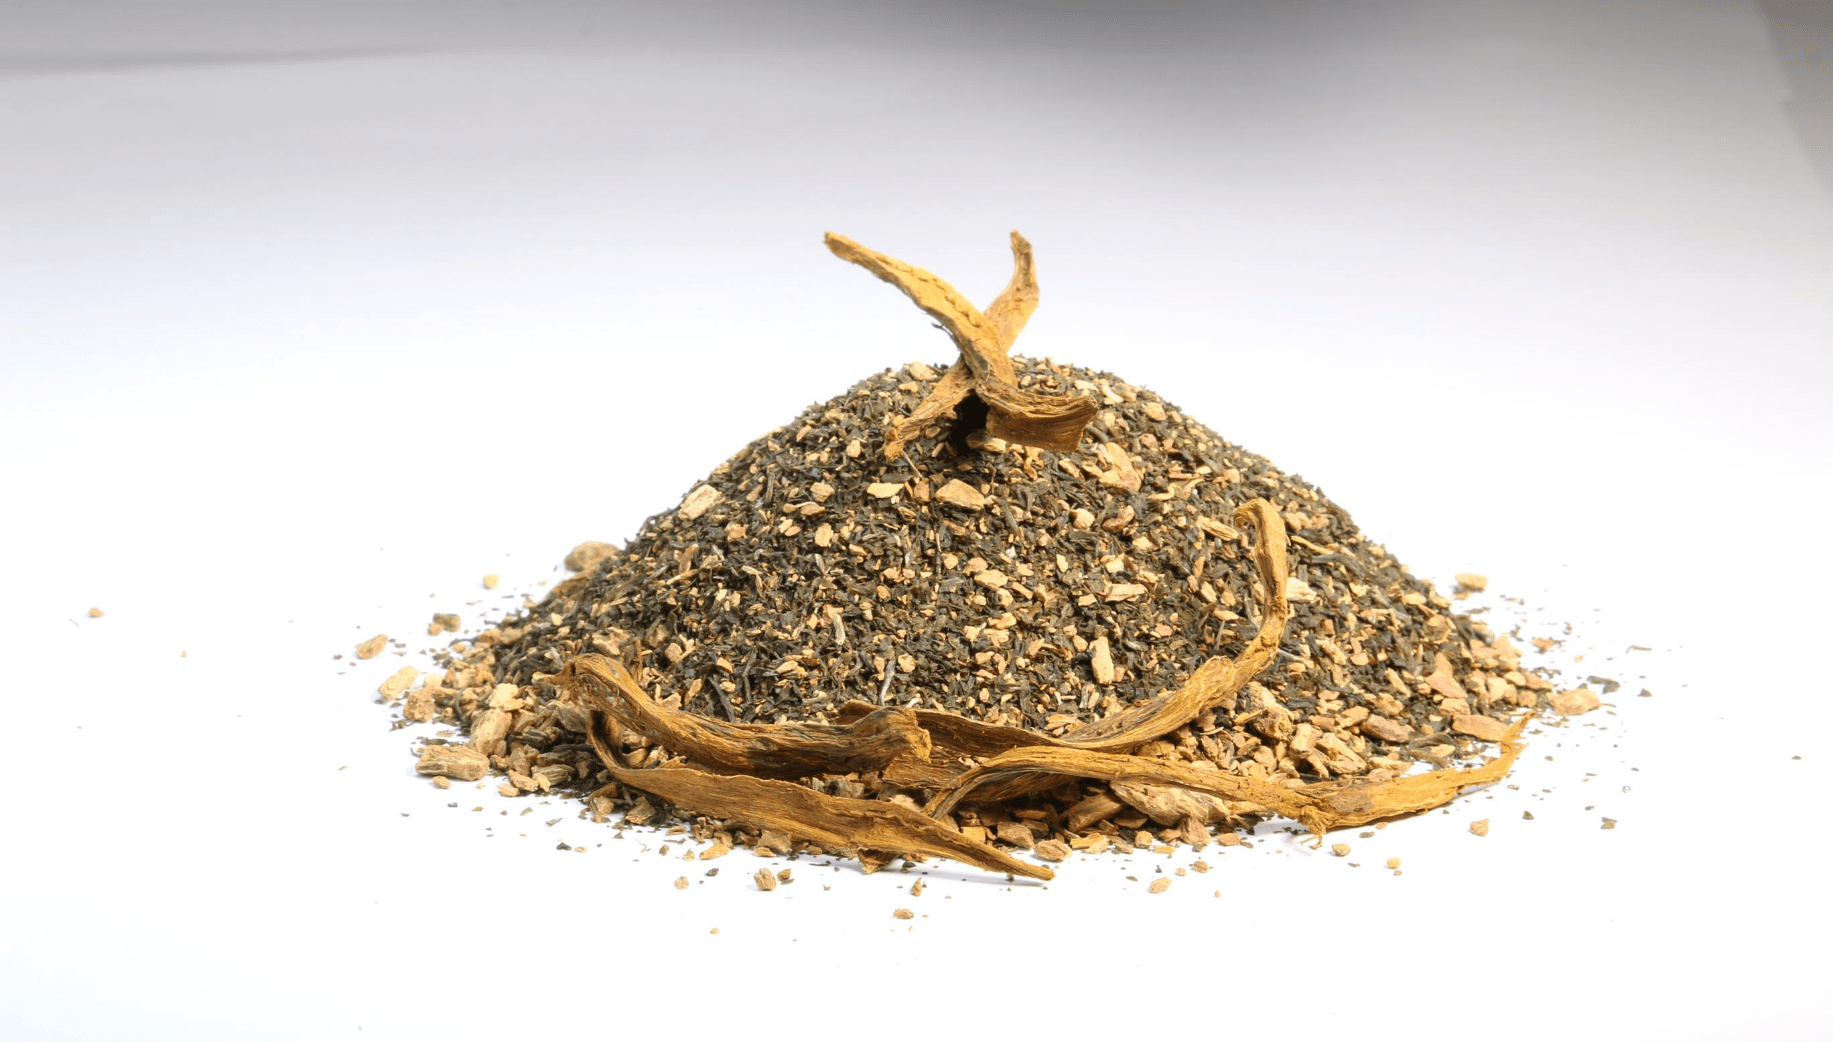 Lynnyang mix with green tea leaves of Meghalaya